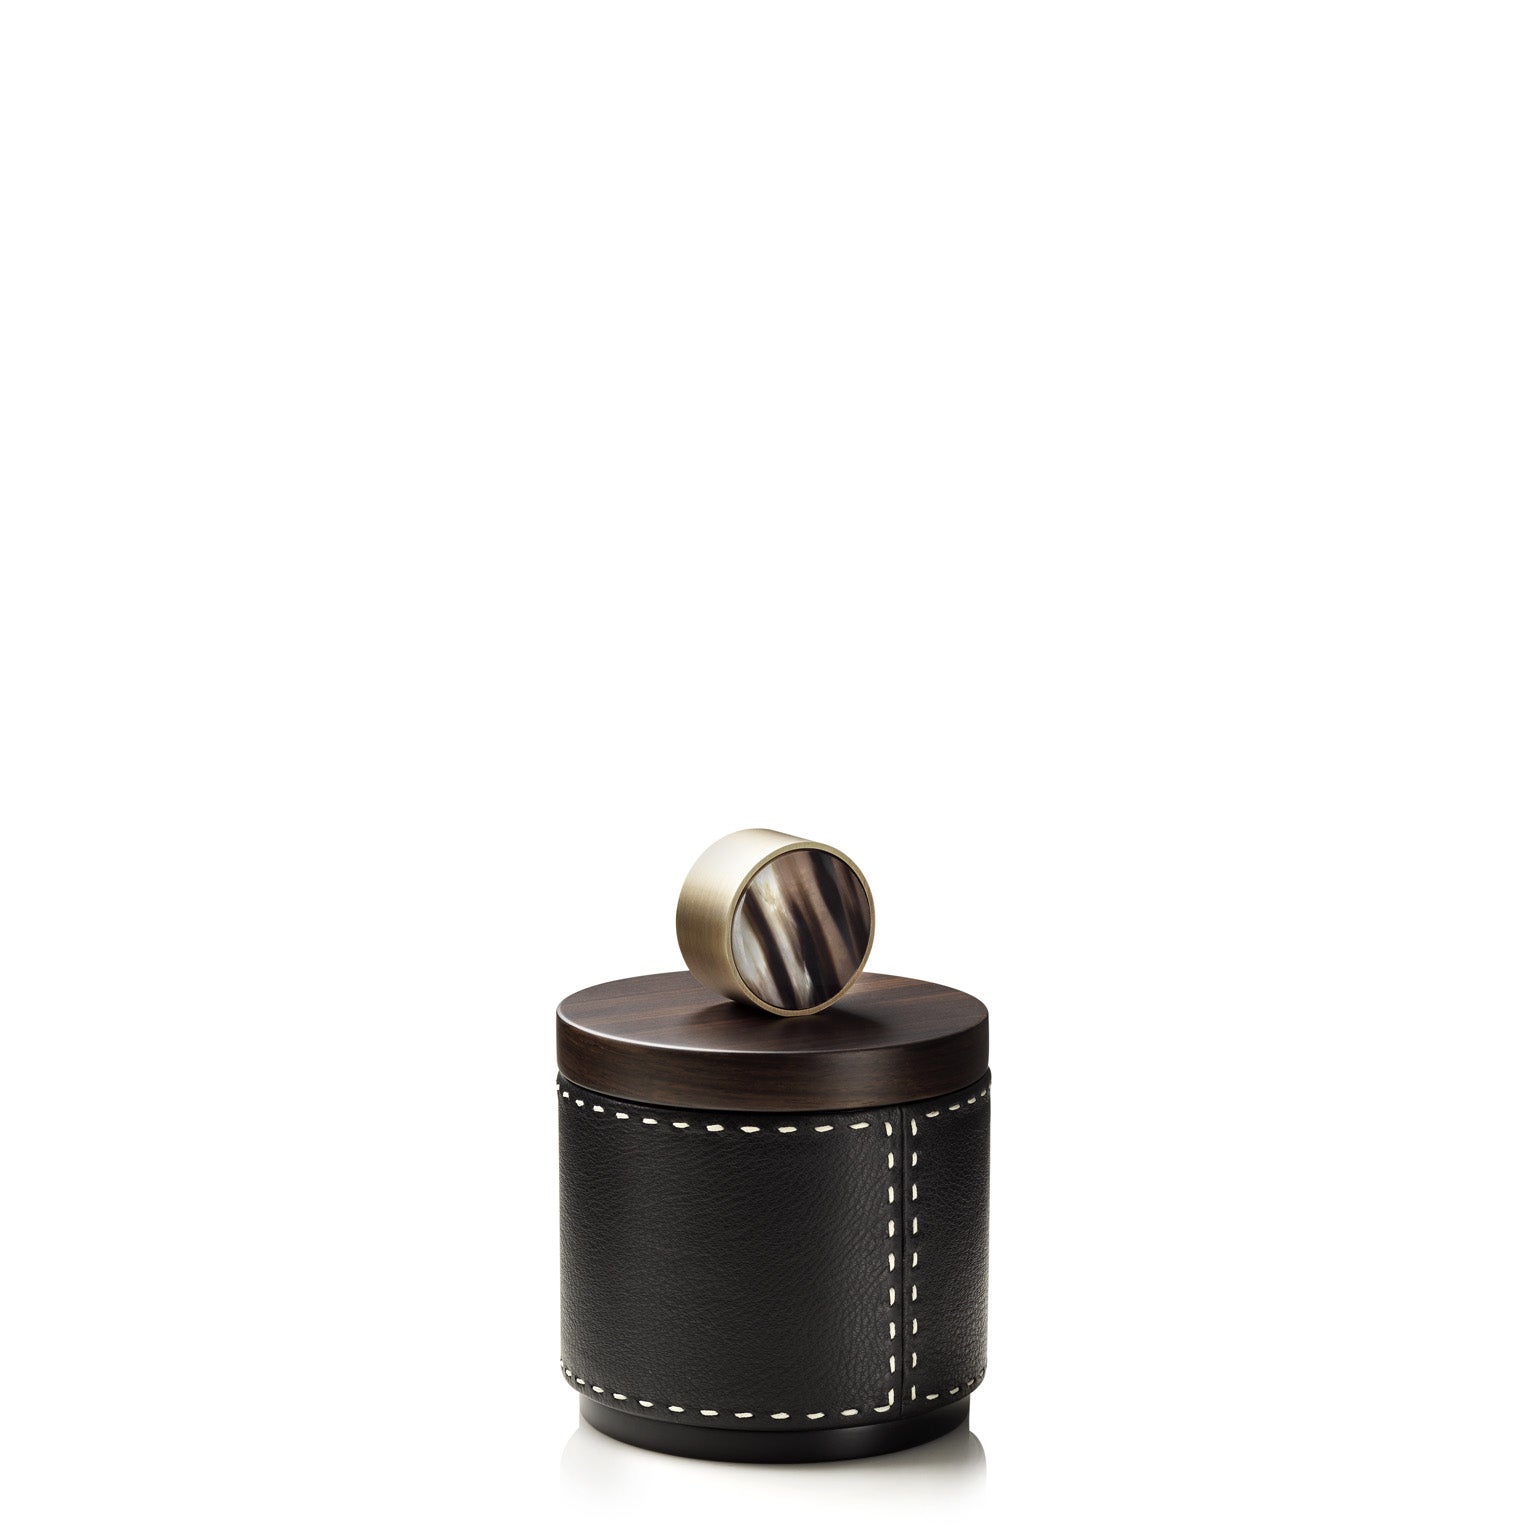 Agneta Round Box in Pebbled Leather with Handle in Corno Italiano, Mod. 4485 For Sale